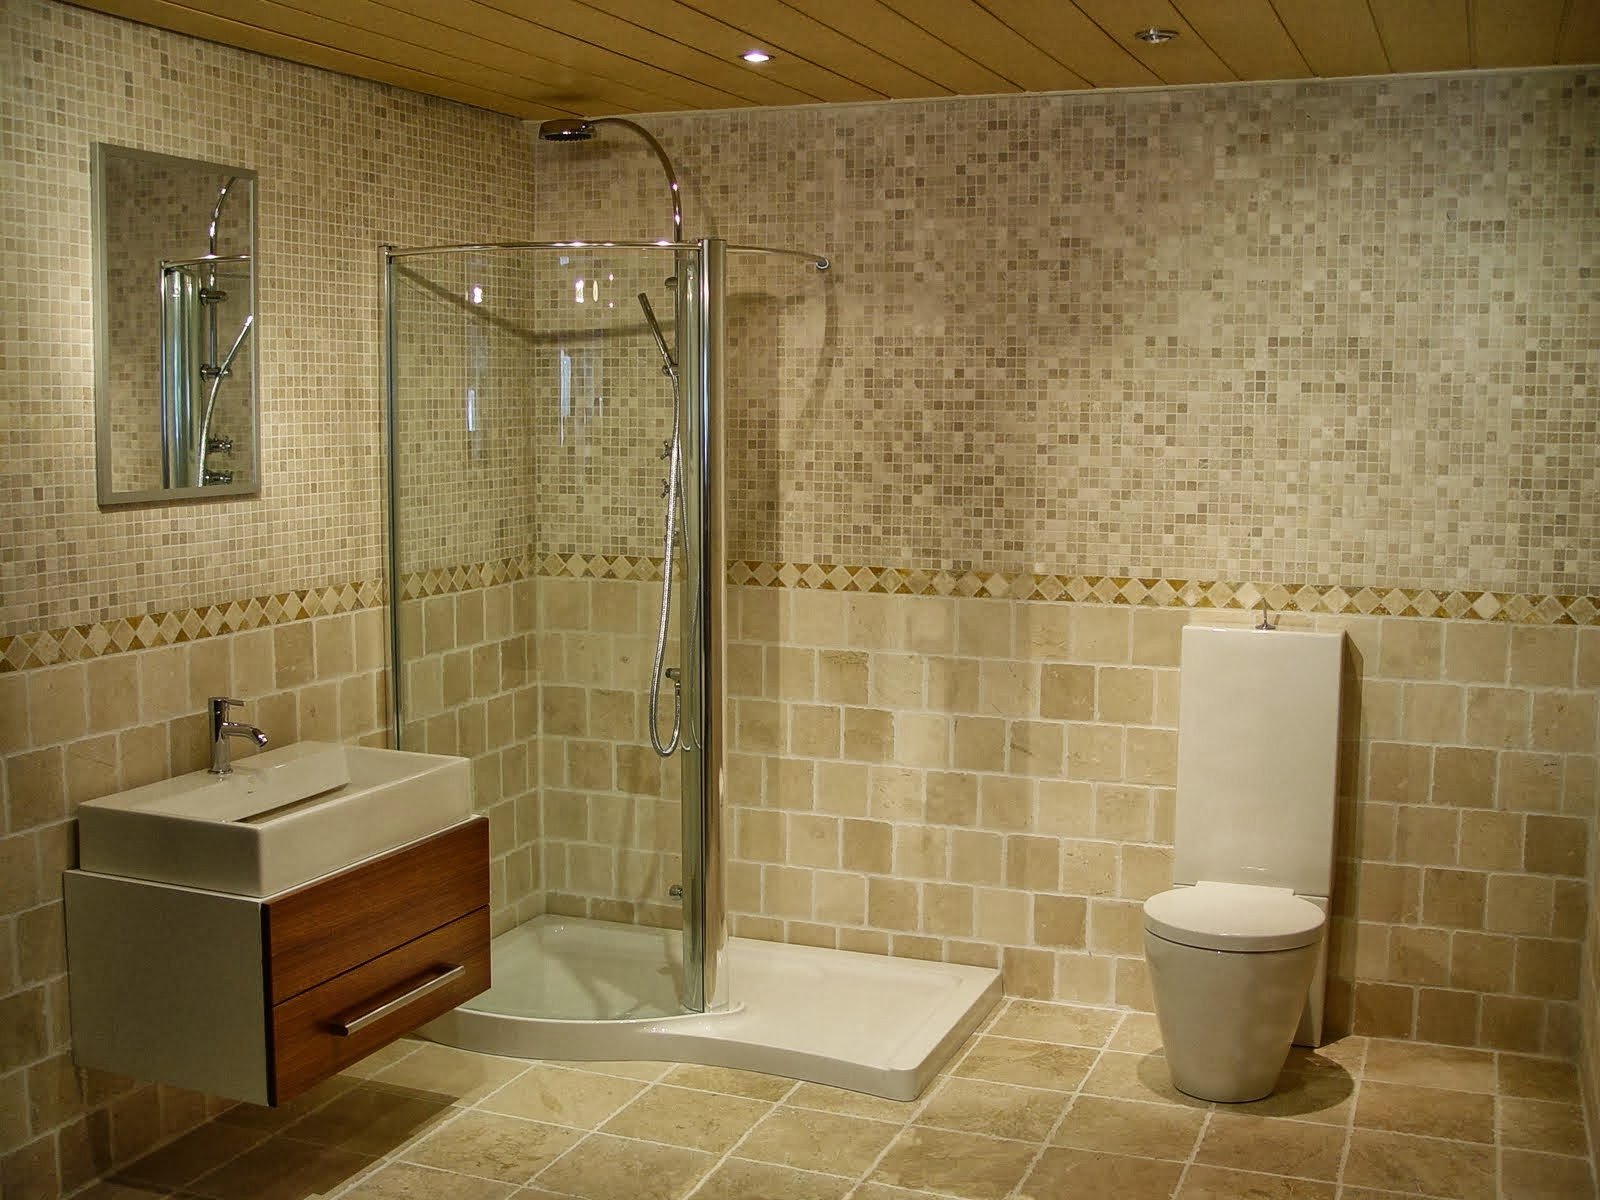 Lowes Bathroom Tile
 Bathroom Lowes Wood Tile Lowes Porcelain Tile